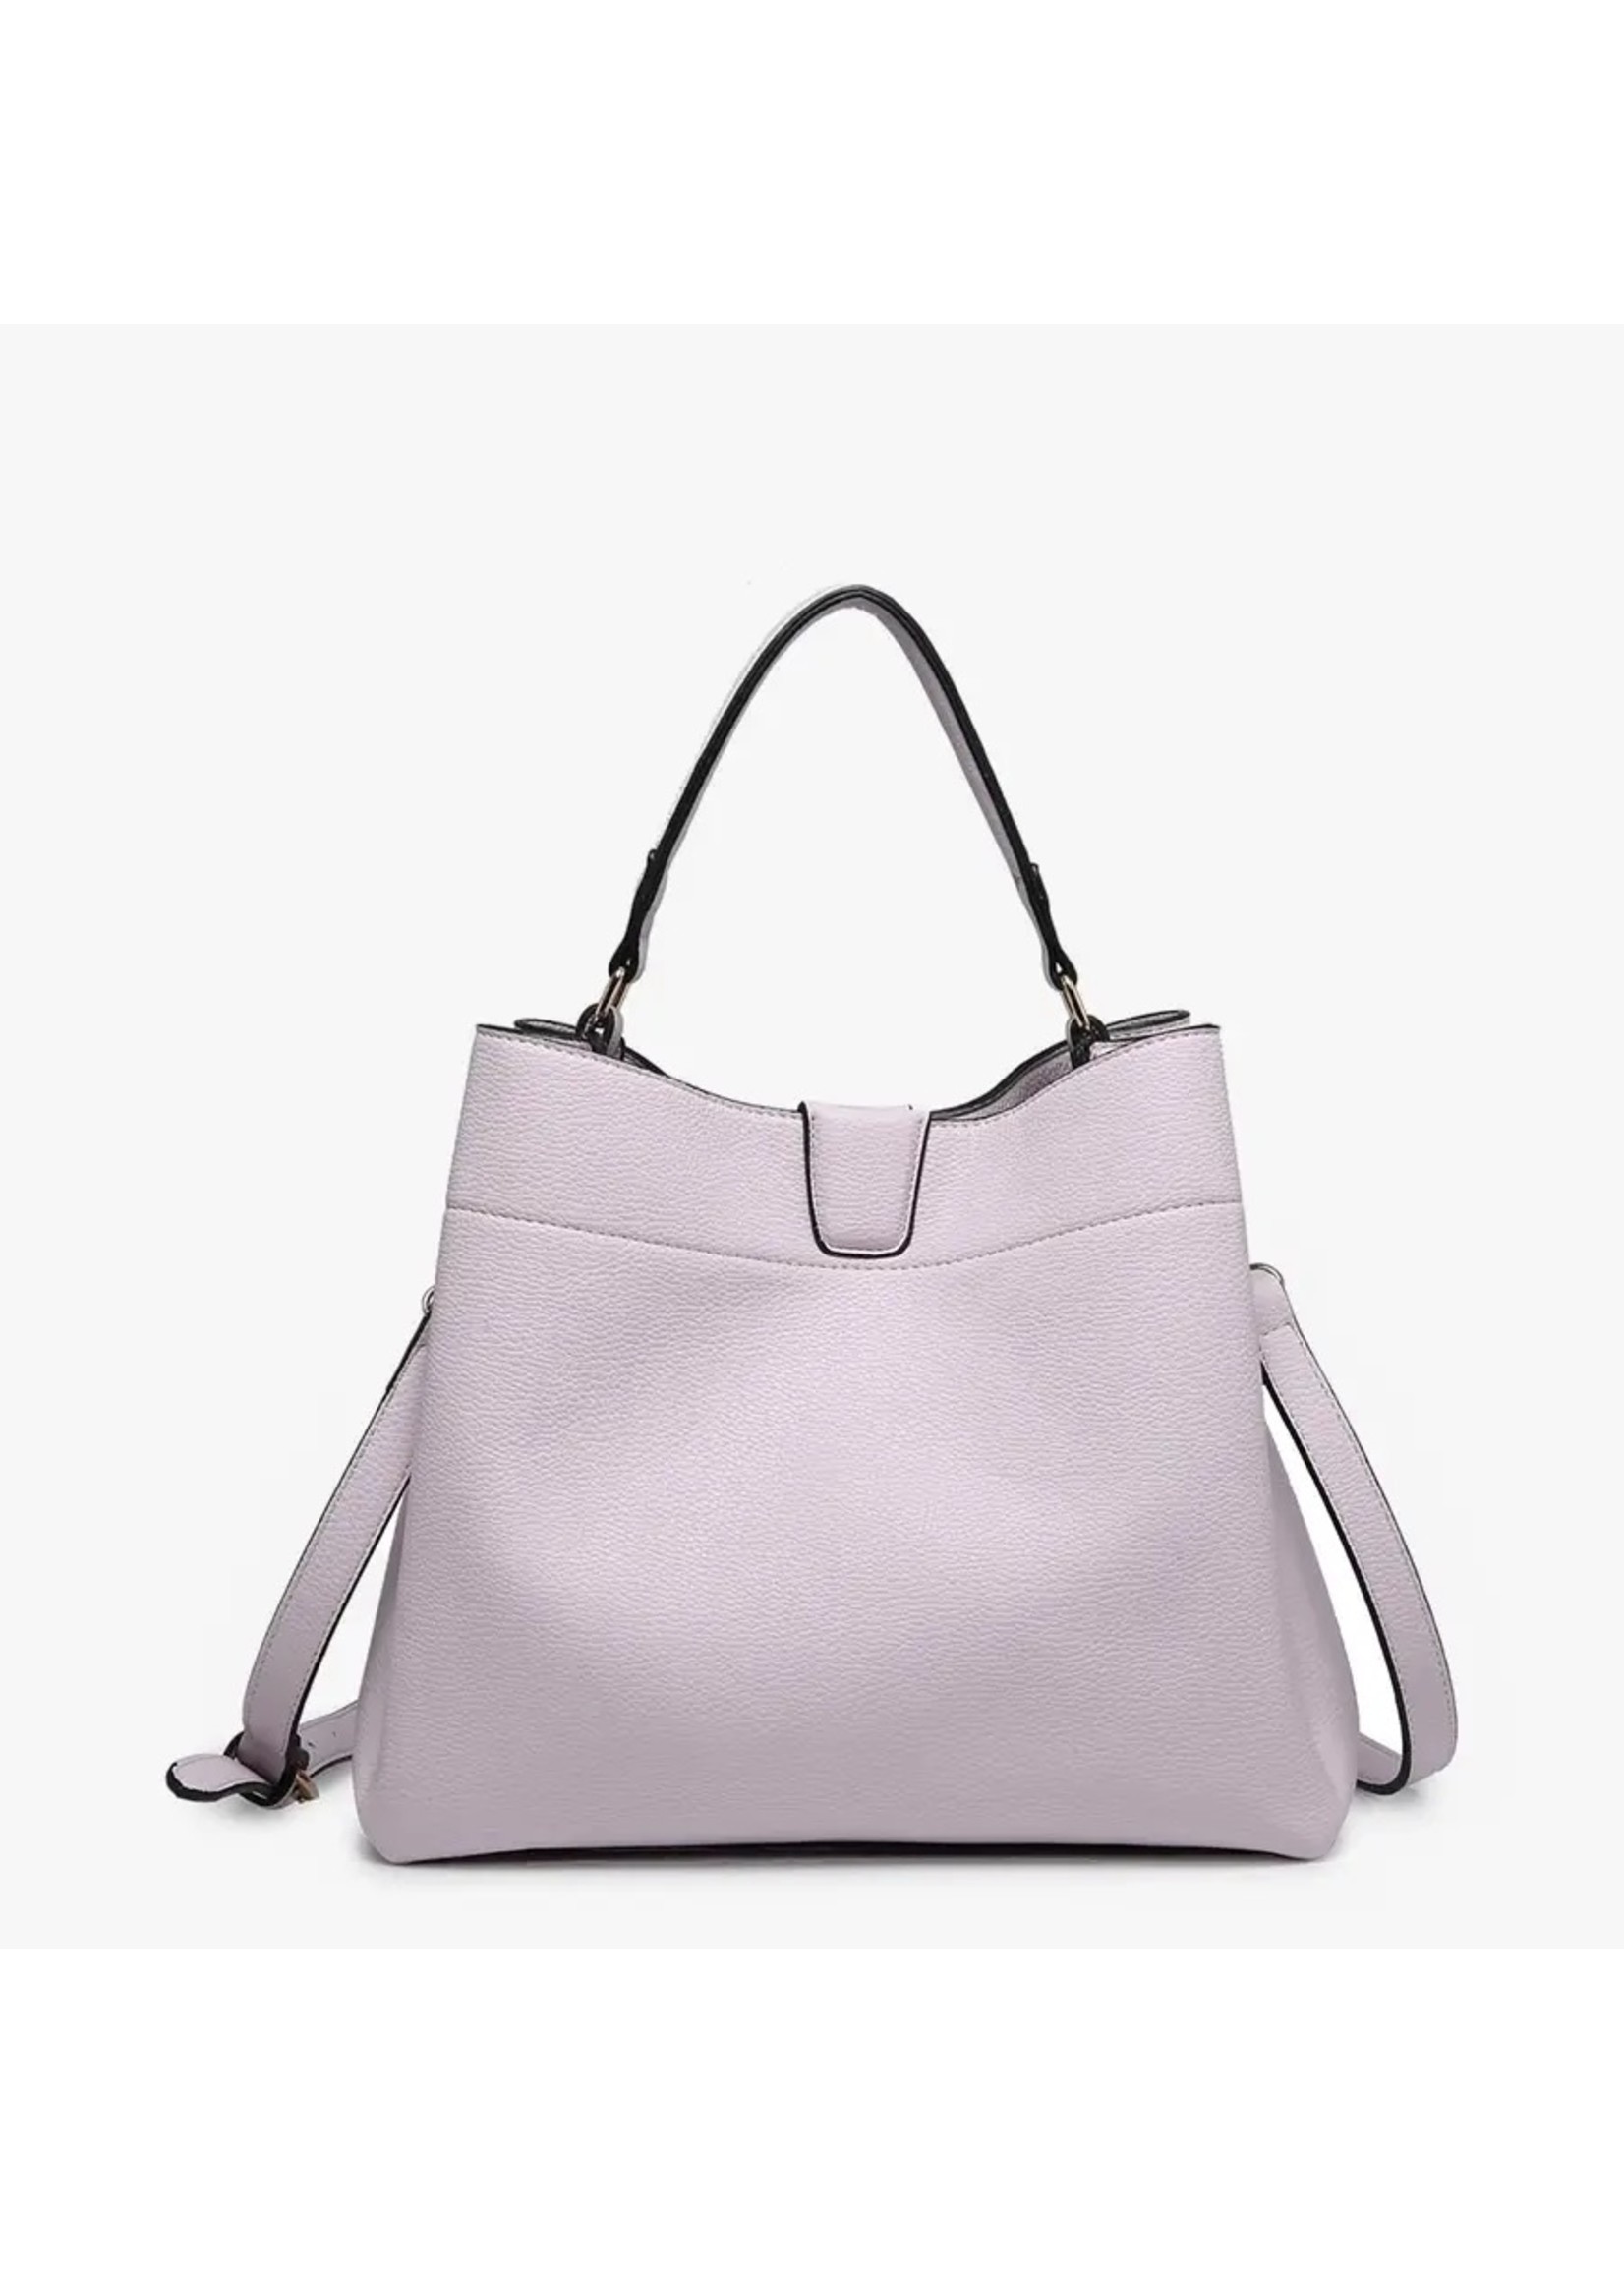 Jen & Co. Cool Pink Tati Satchel Bag